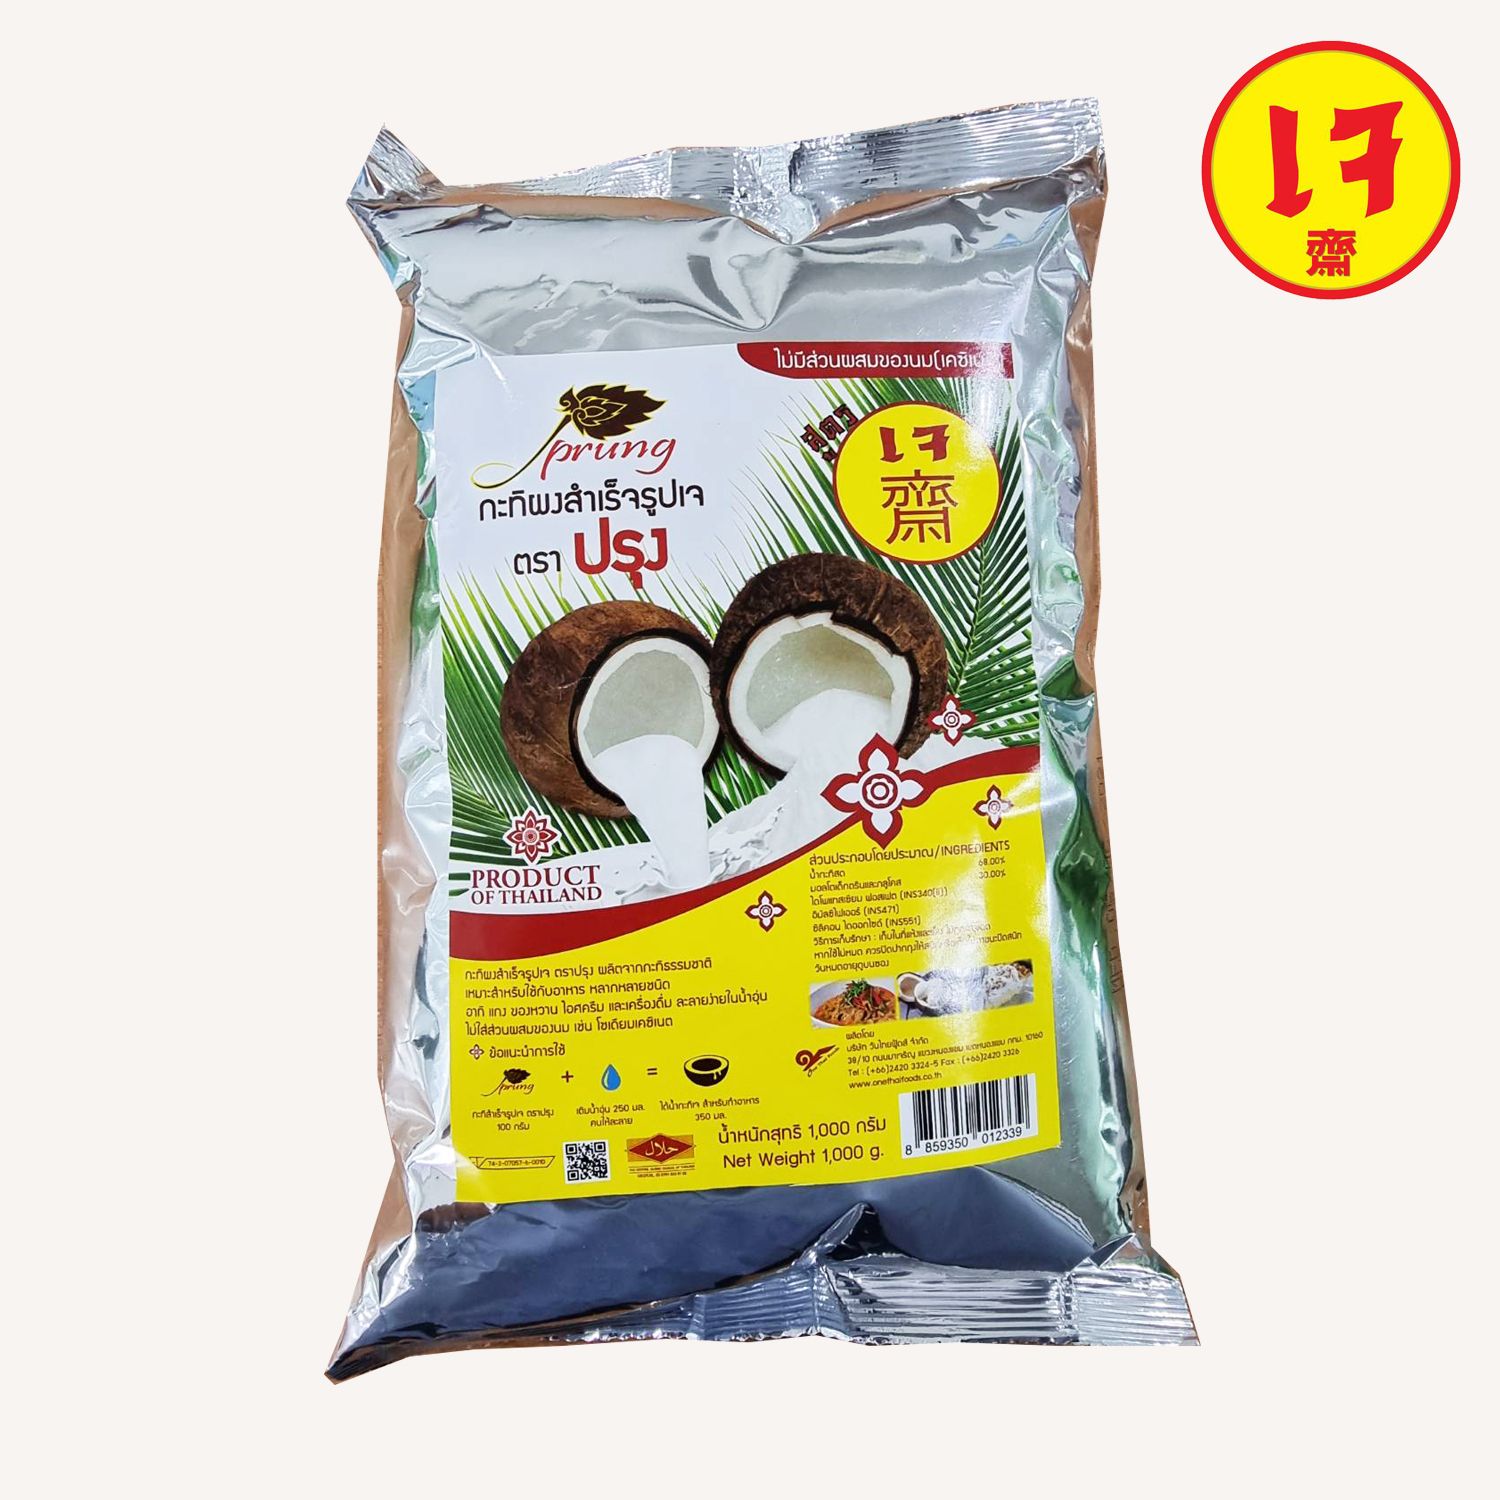 Vegan Coconut milk powder 1 kg.